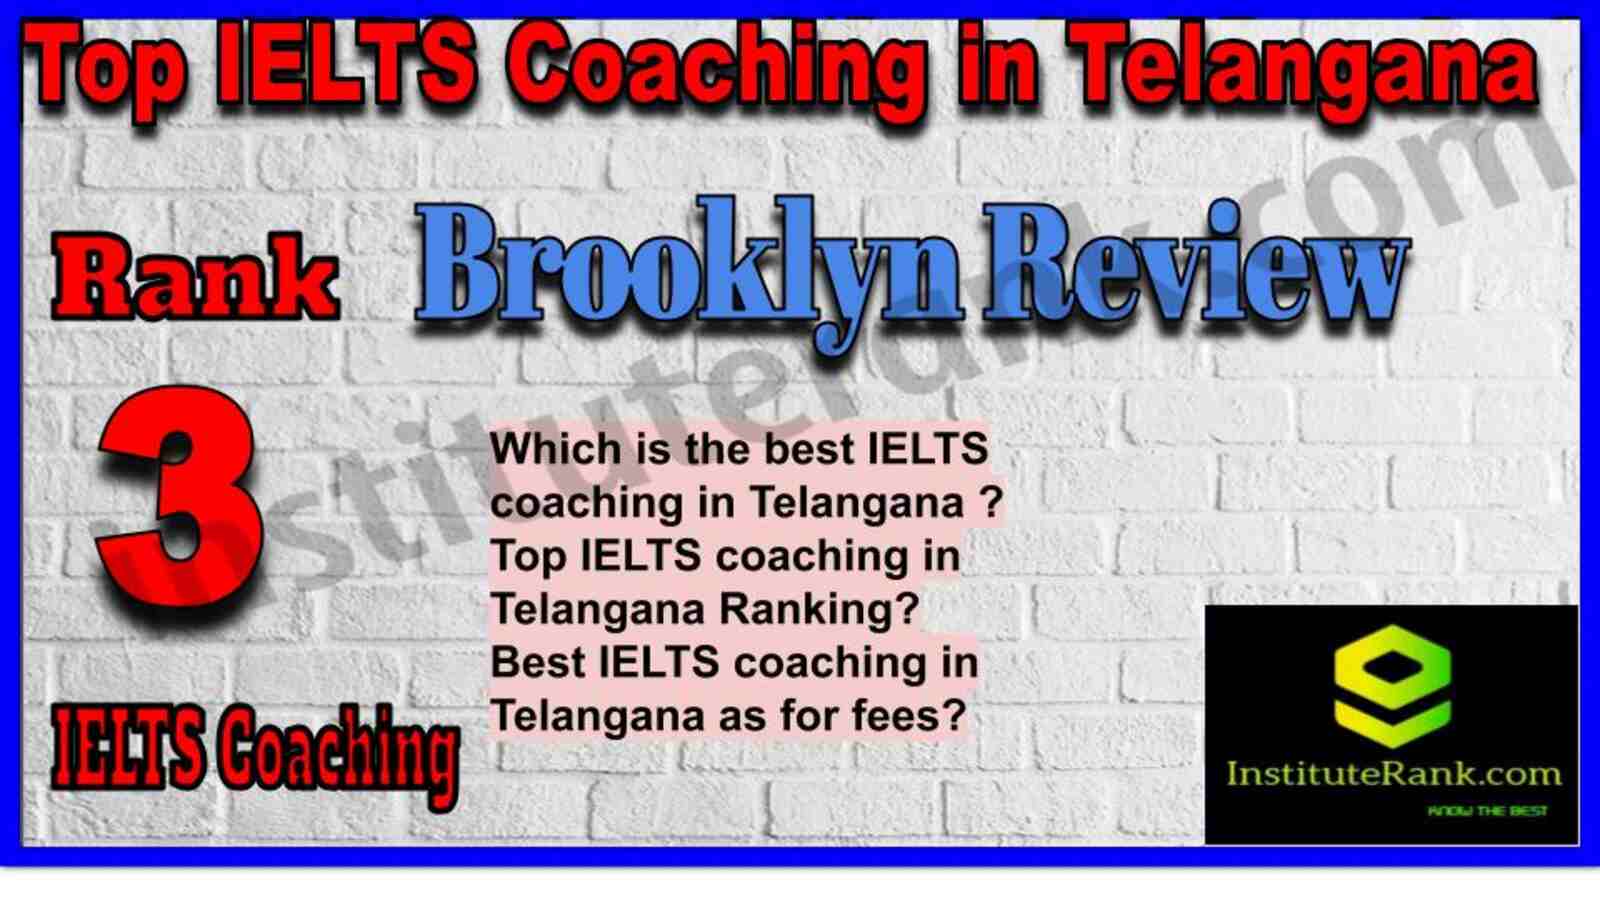 Rank 3. Brooklyn Review | Best IELTS Coaching in Telangana